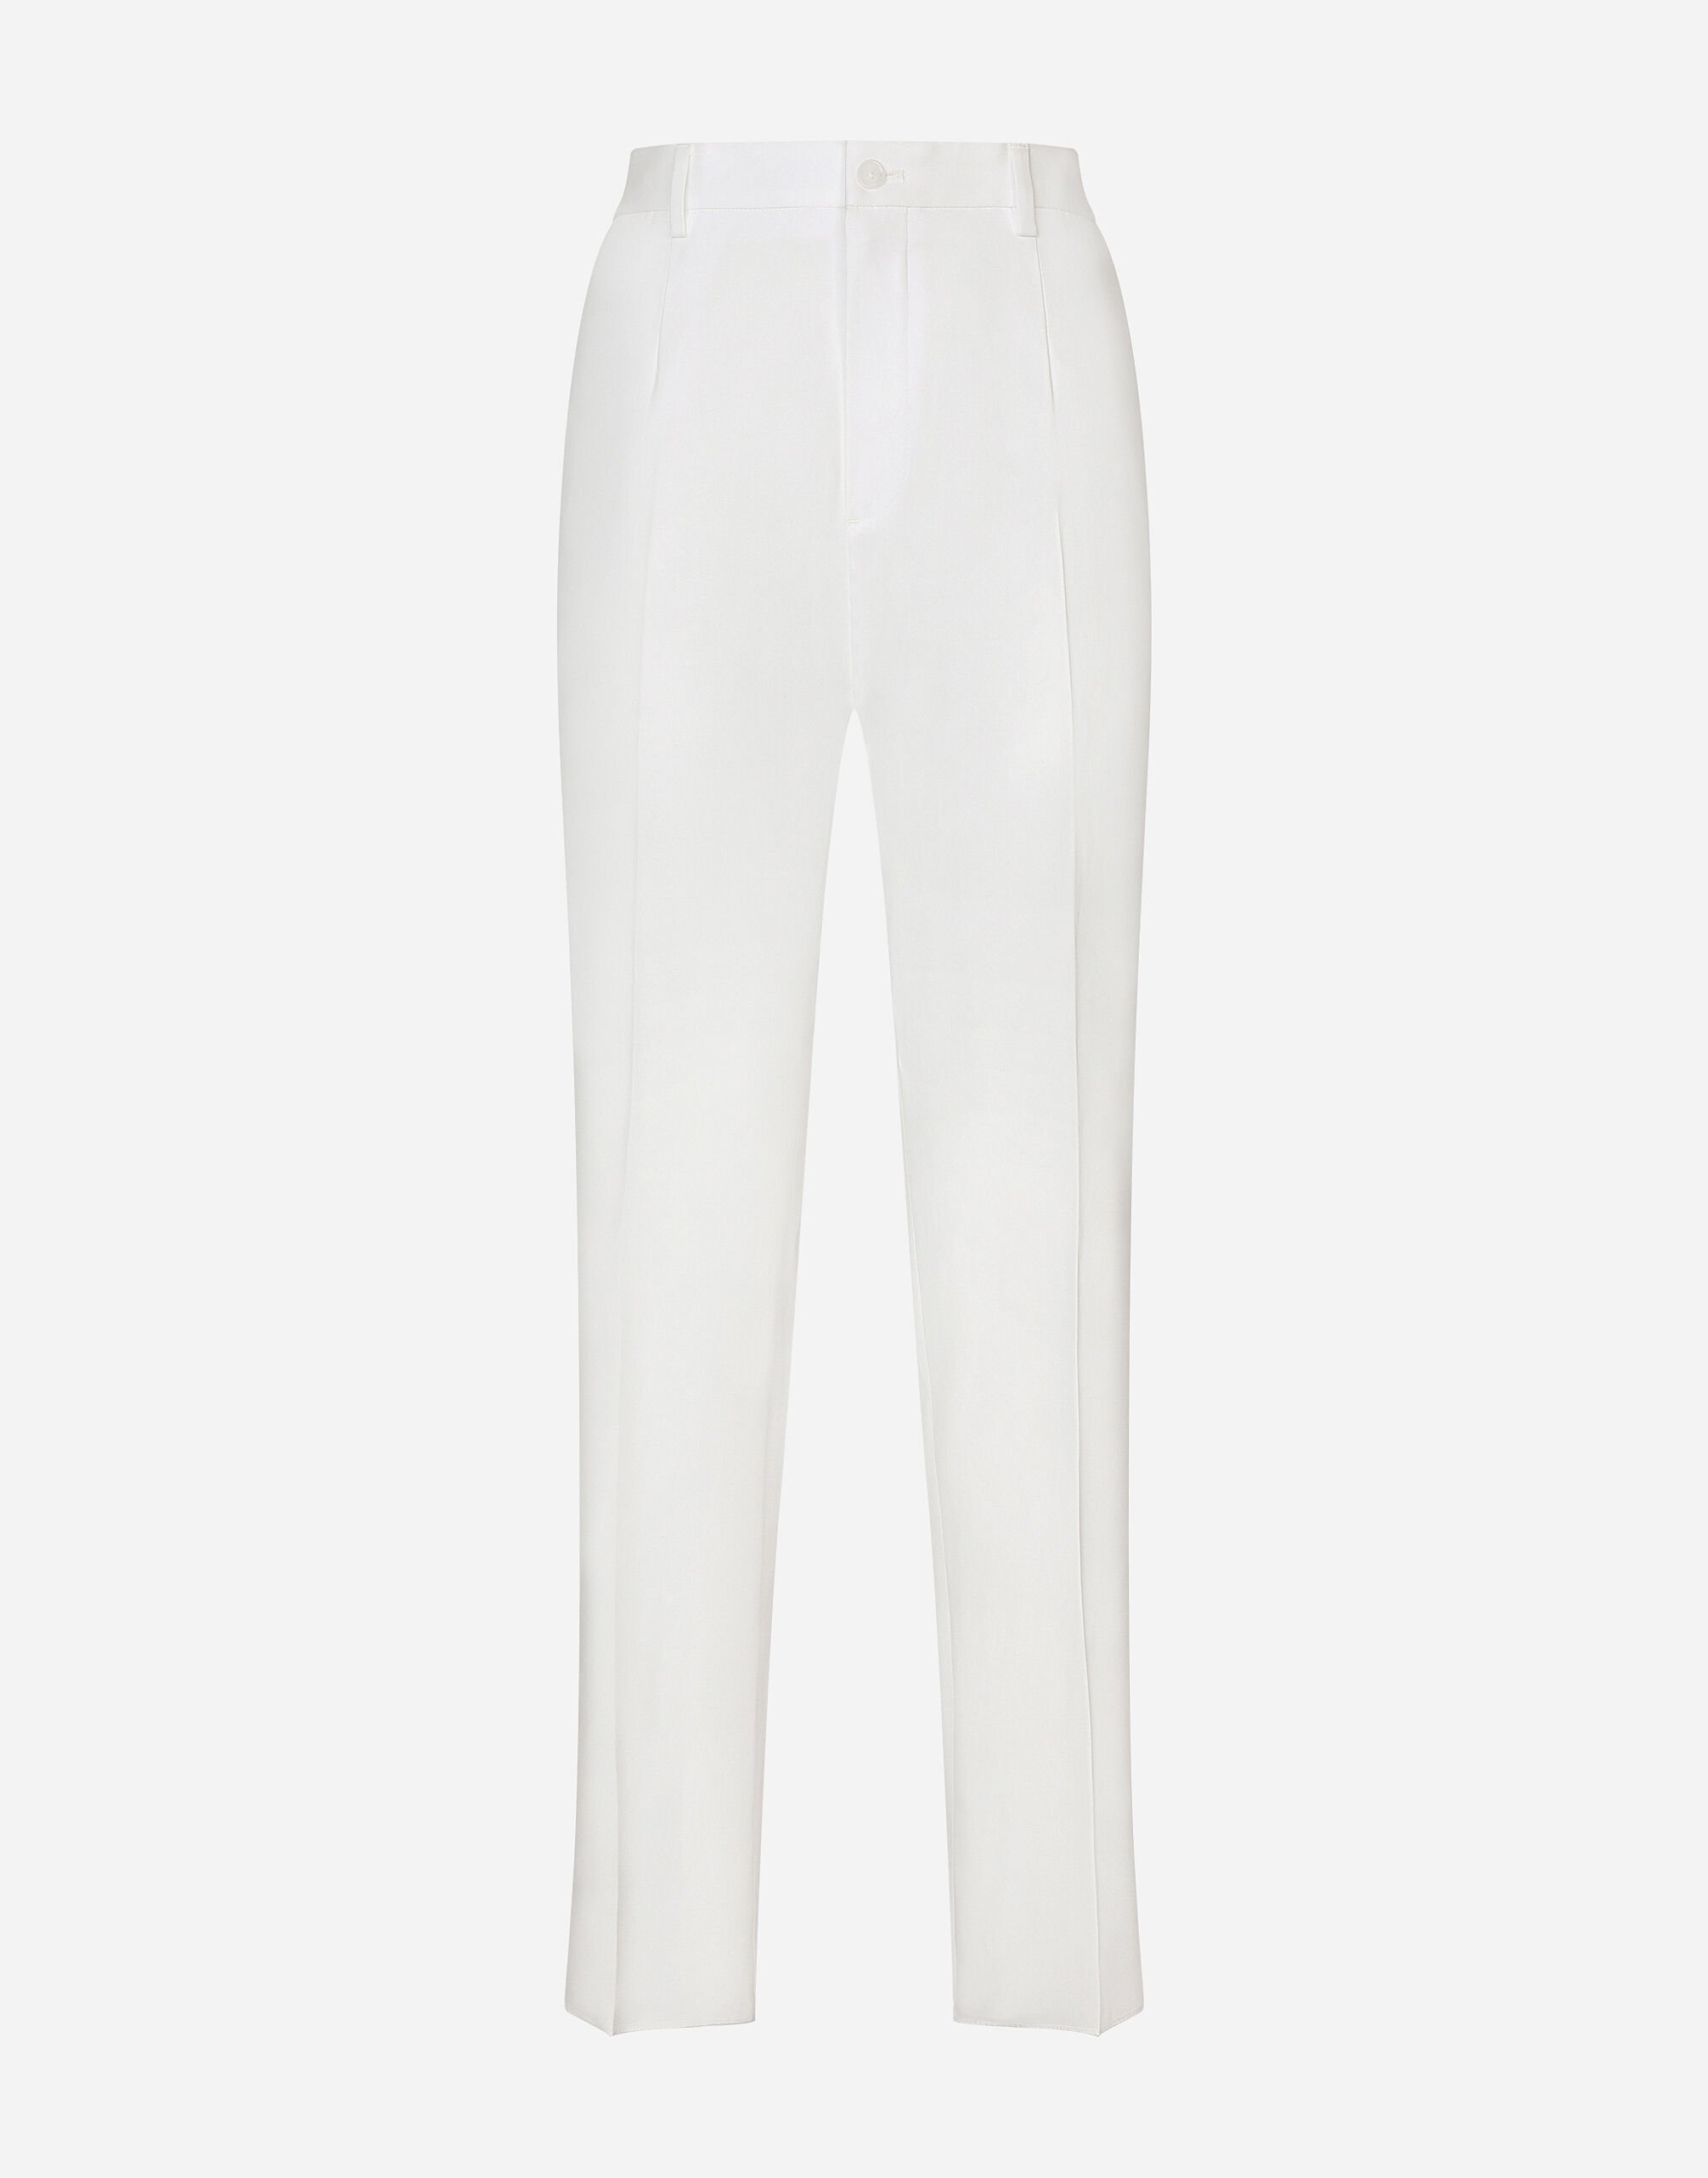 Dolce & Gabbana Stretch cotton pants with branded tag Print G8RV9TII7CZ